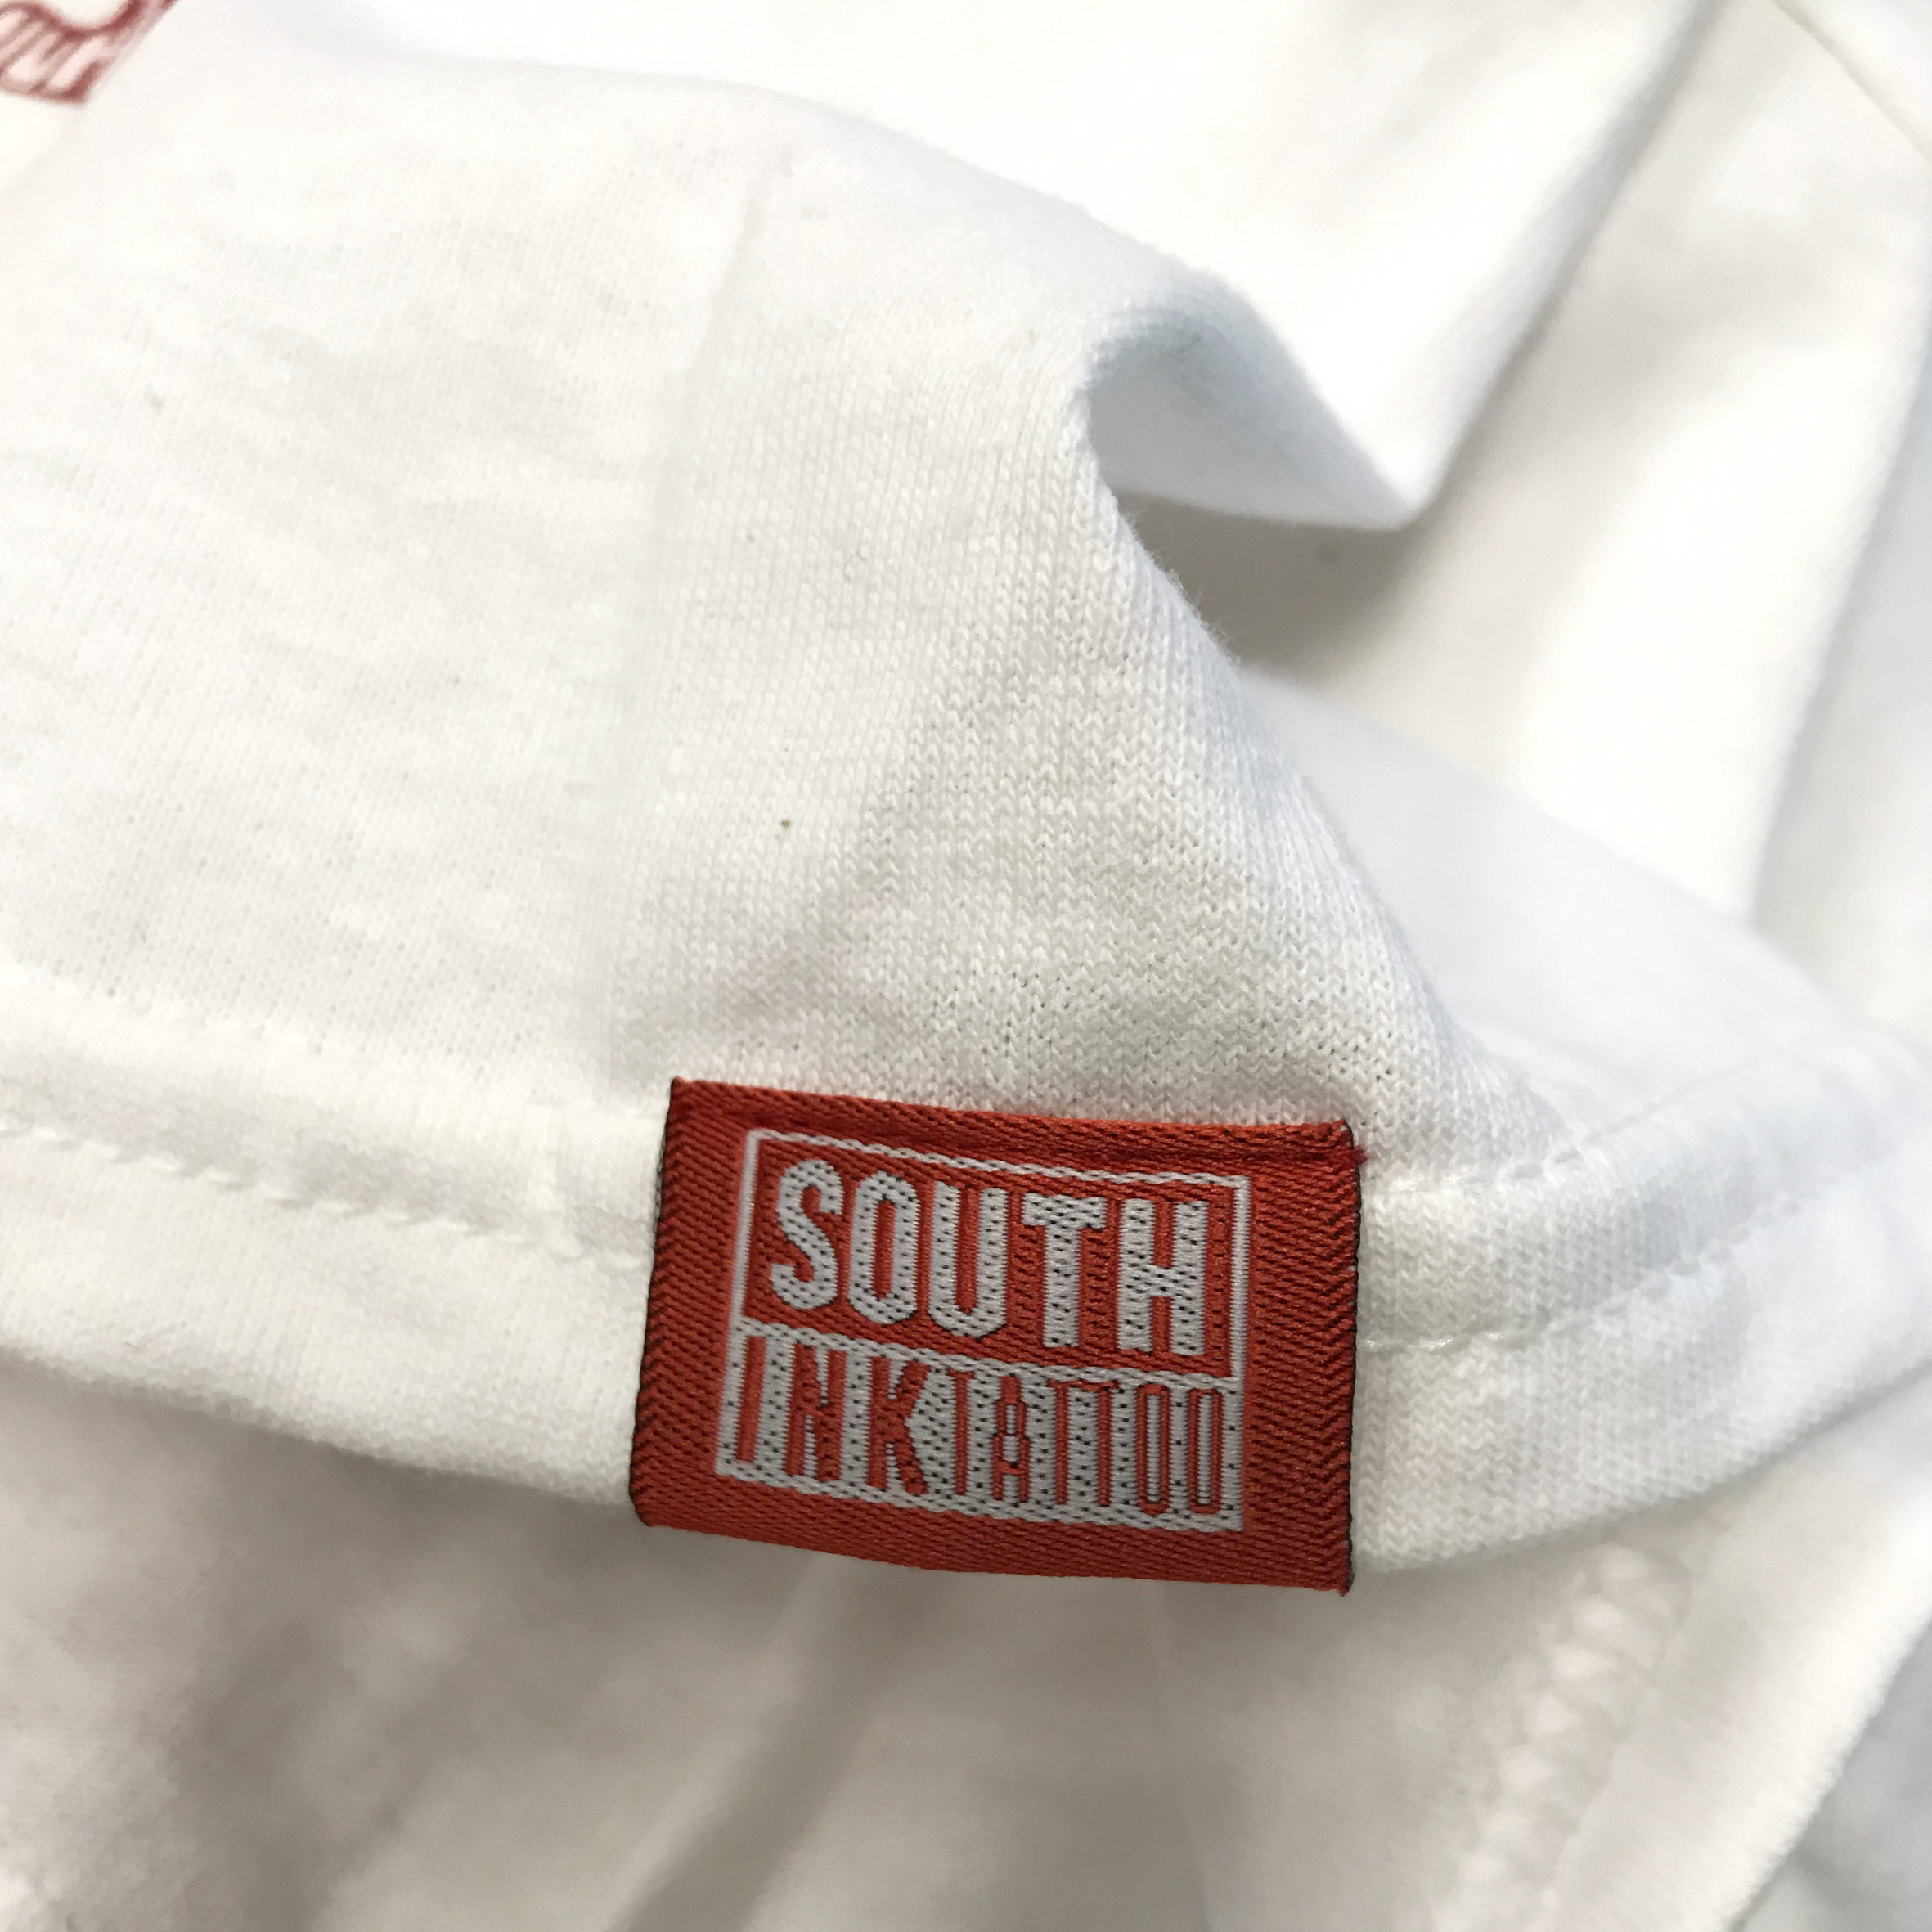 Red Kappa | T-Shirt | South Ink Tattoo | Fabio Gargiulo